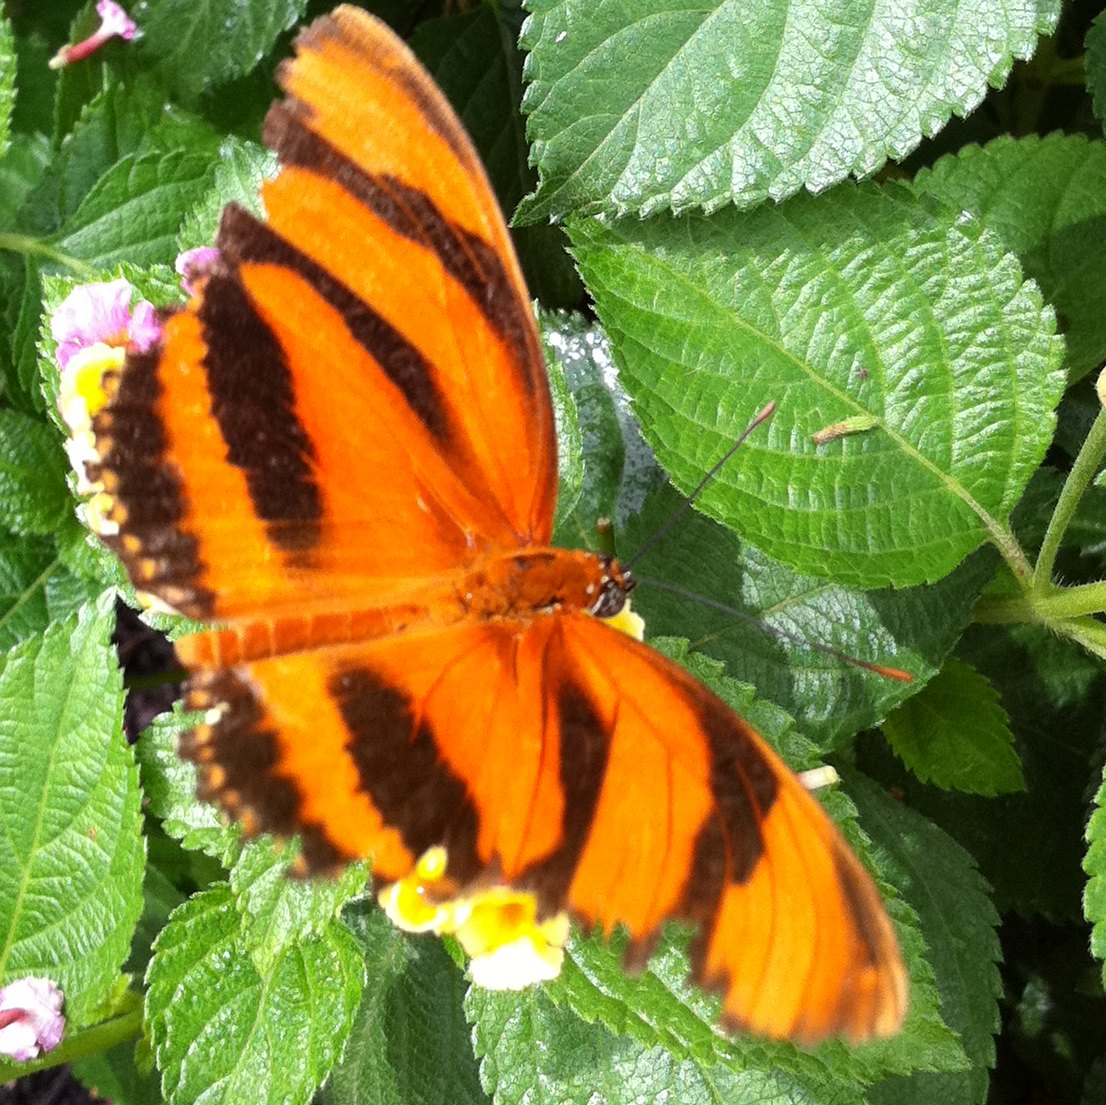 Banded Orange Heliconian / Orange Tiger Butterfly